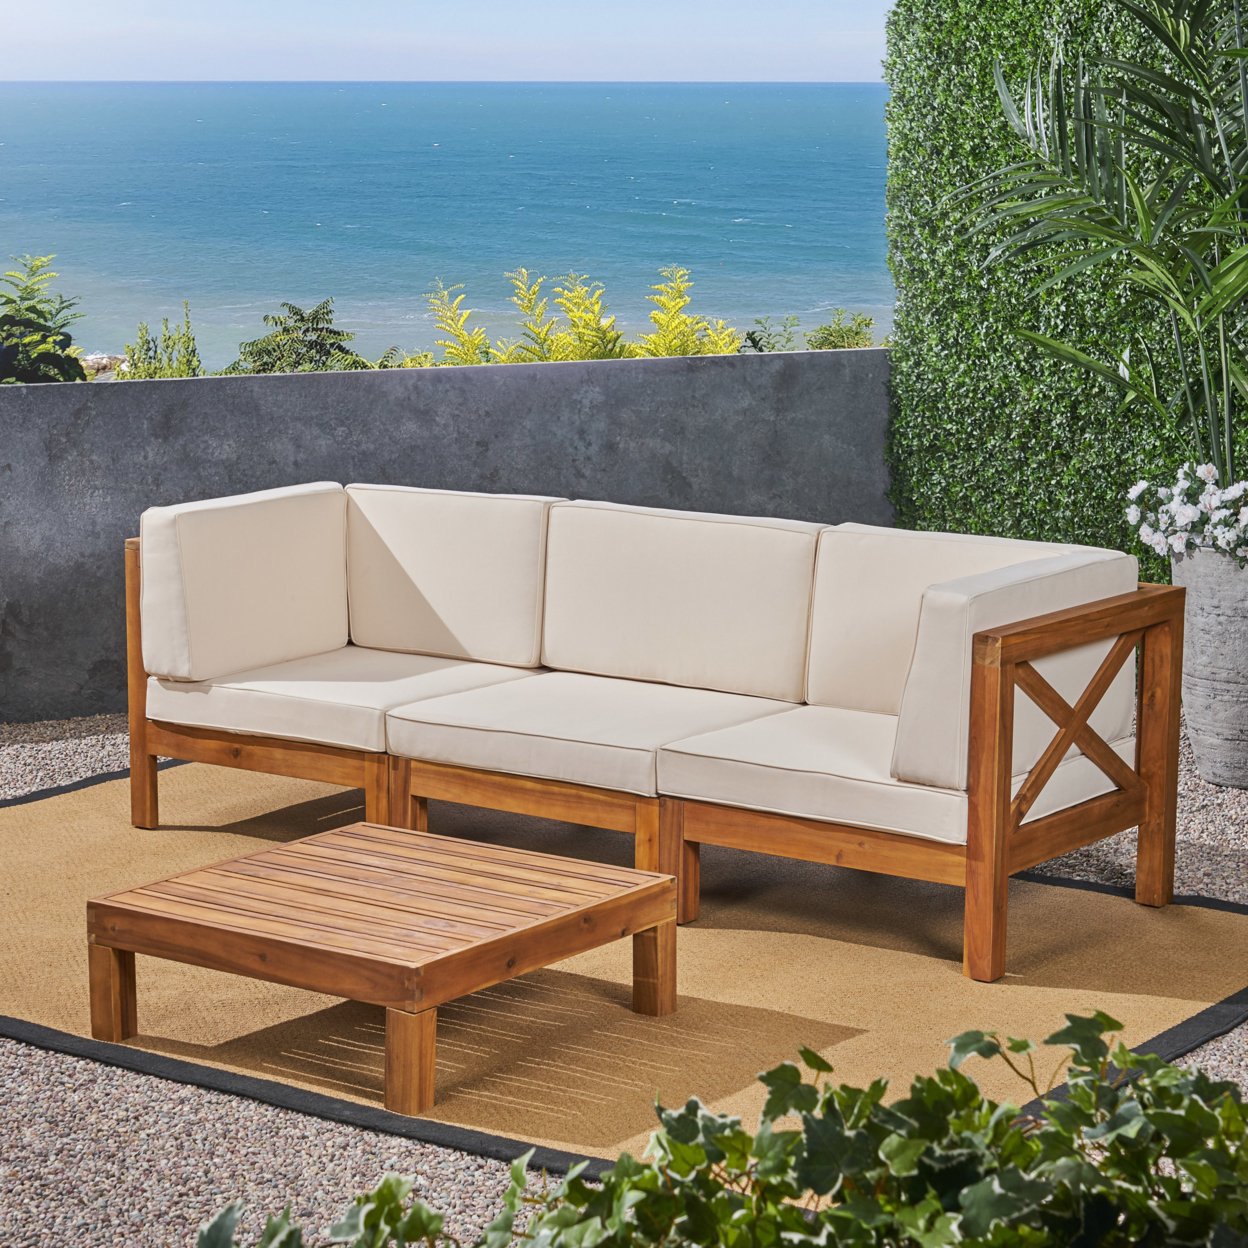 Brava Outdoor Modular Acacia Wood Sofa And Coffee Table Set With Cushions - Teak Finish + Beige